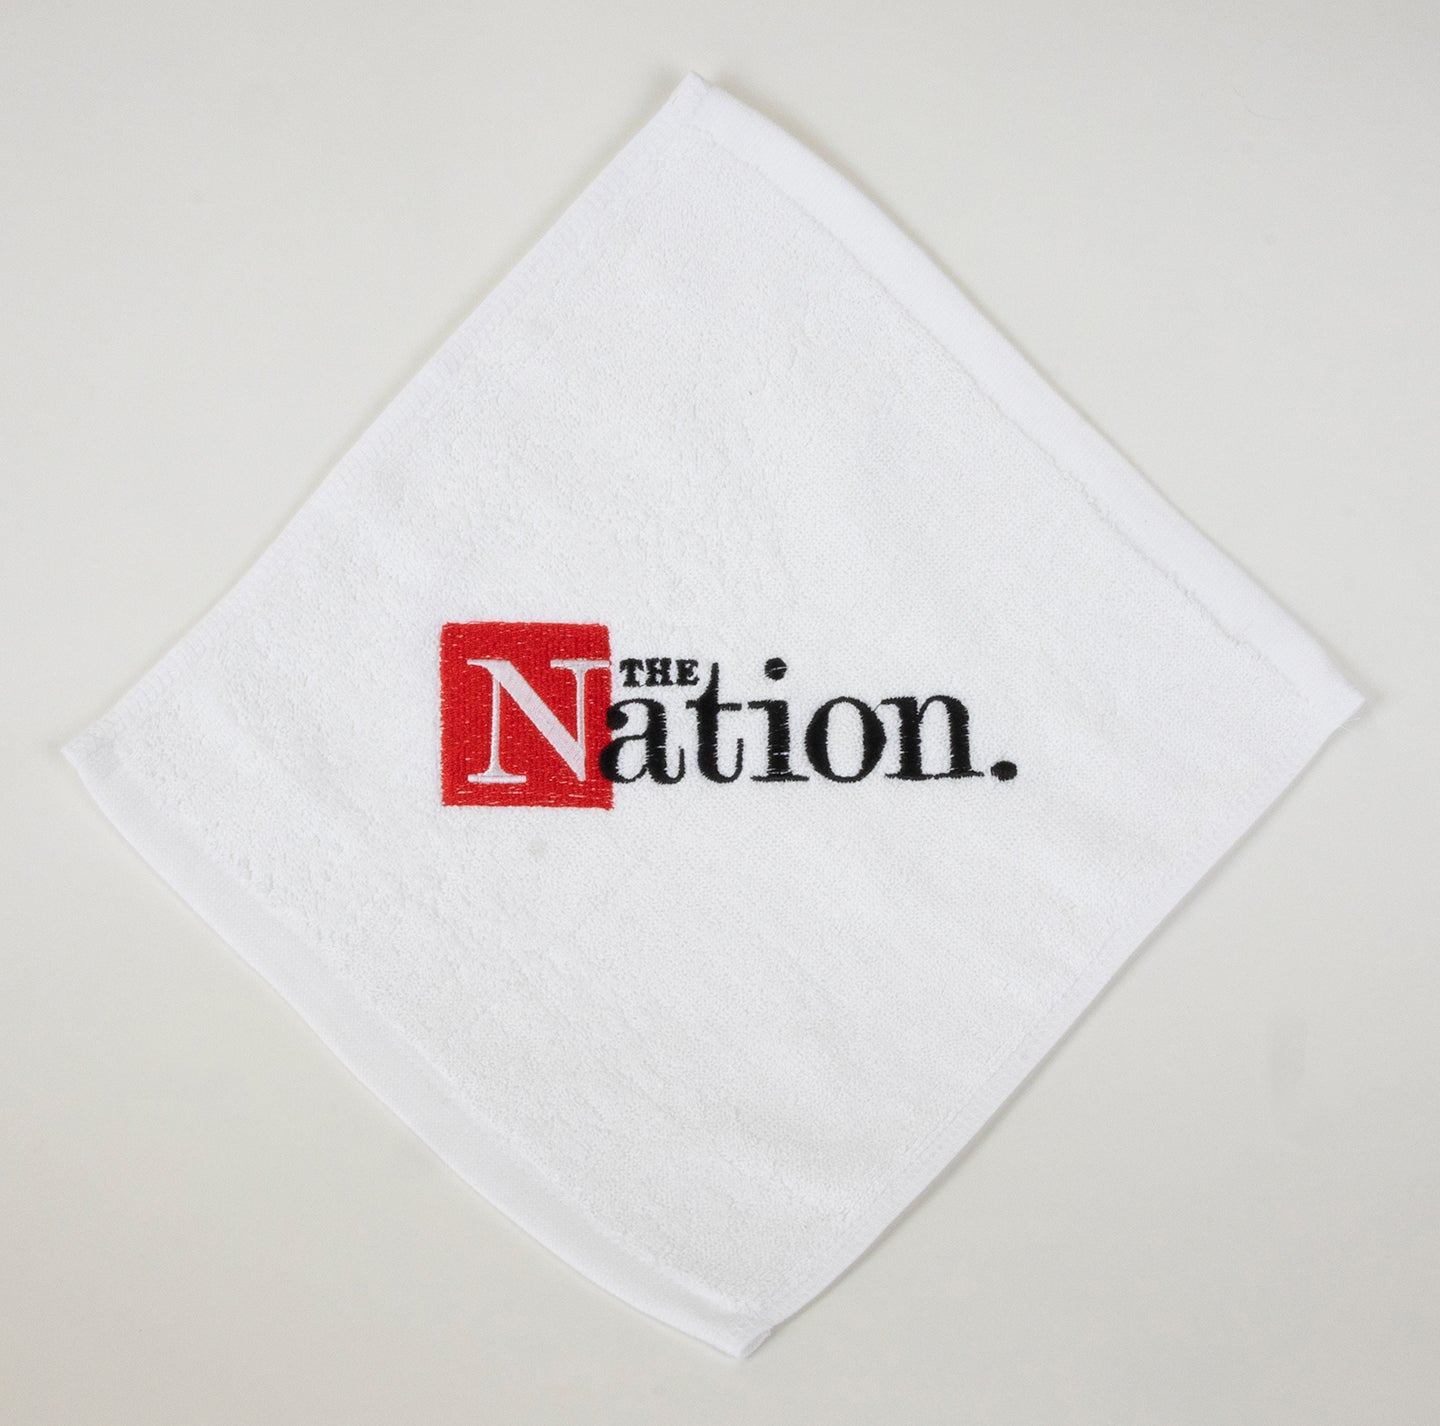 Nation Dish Towels